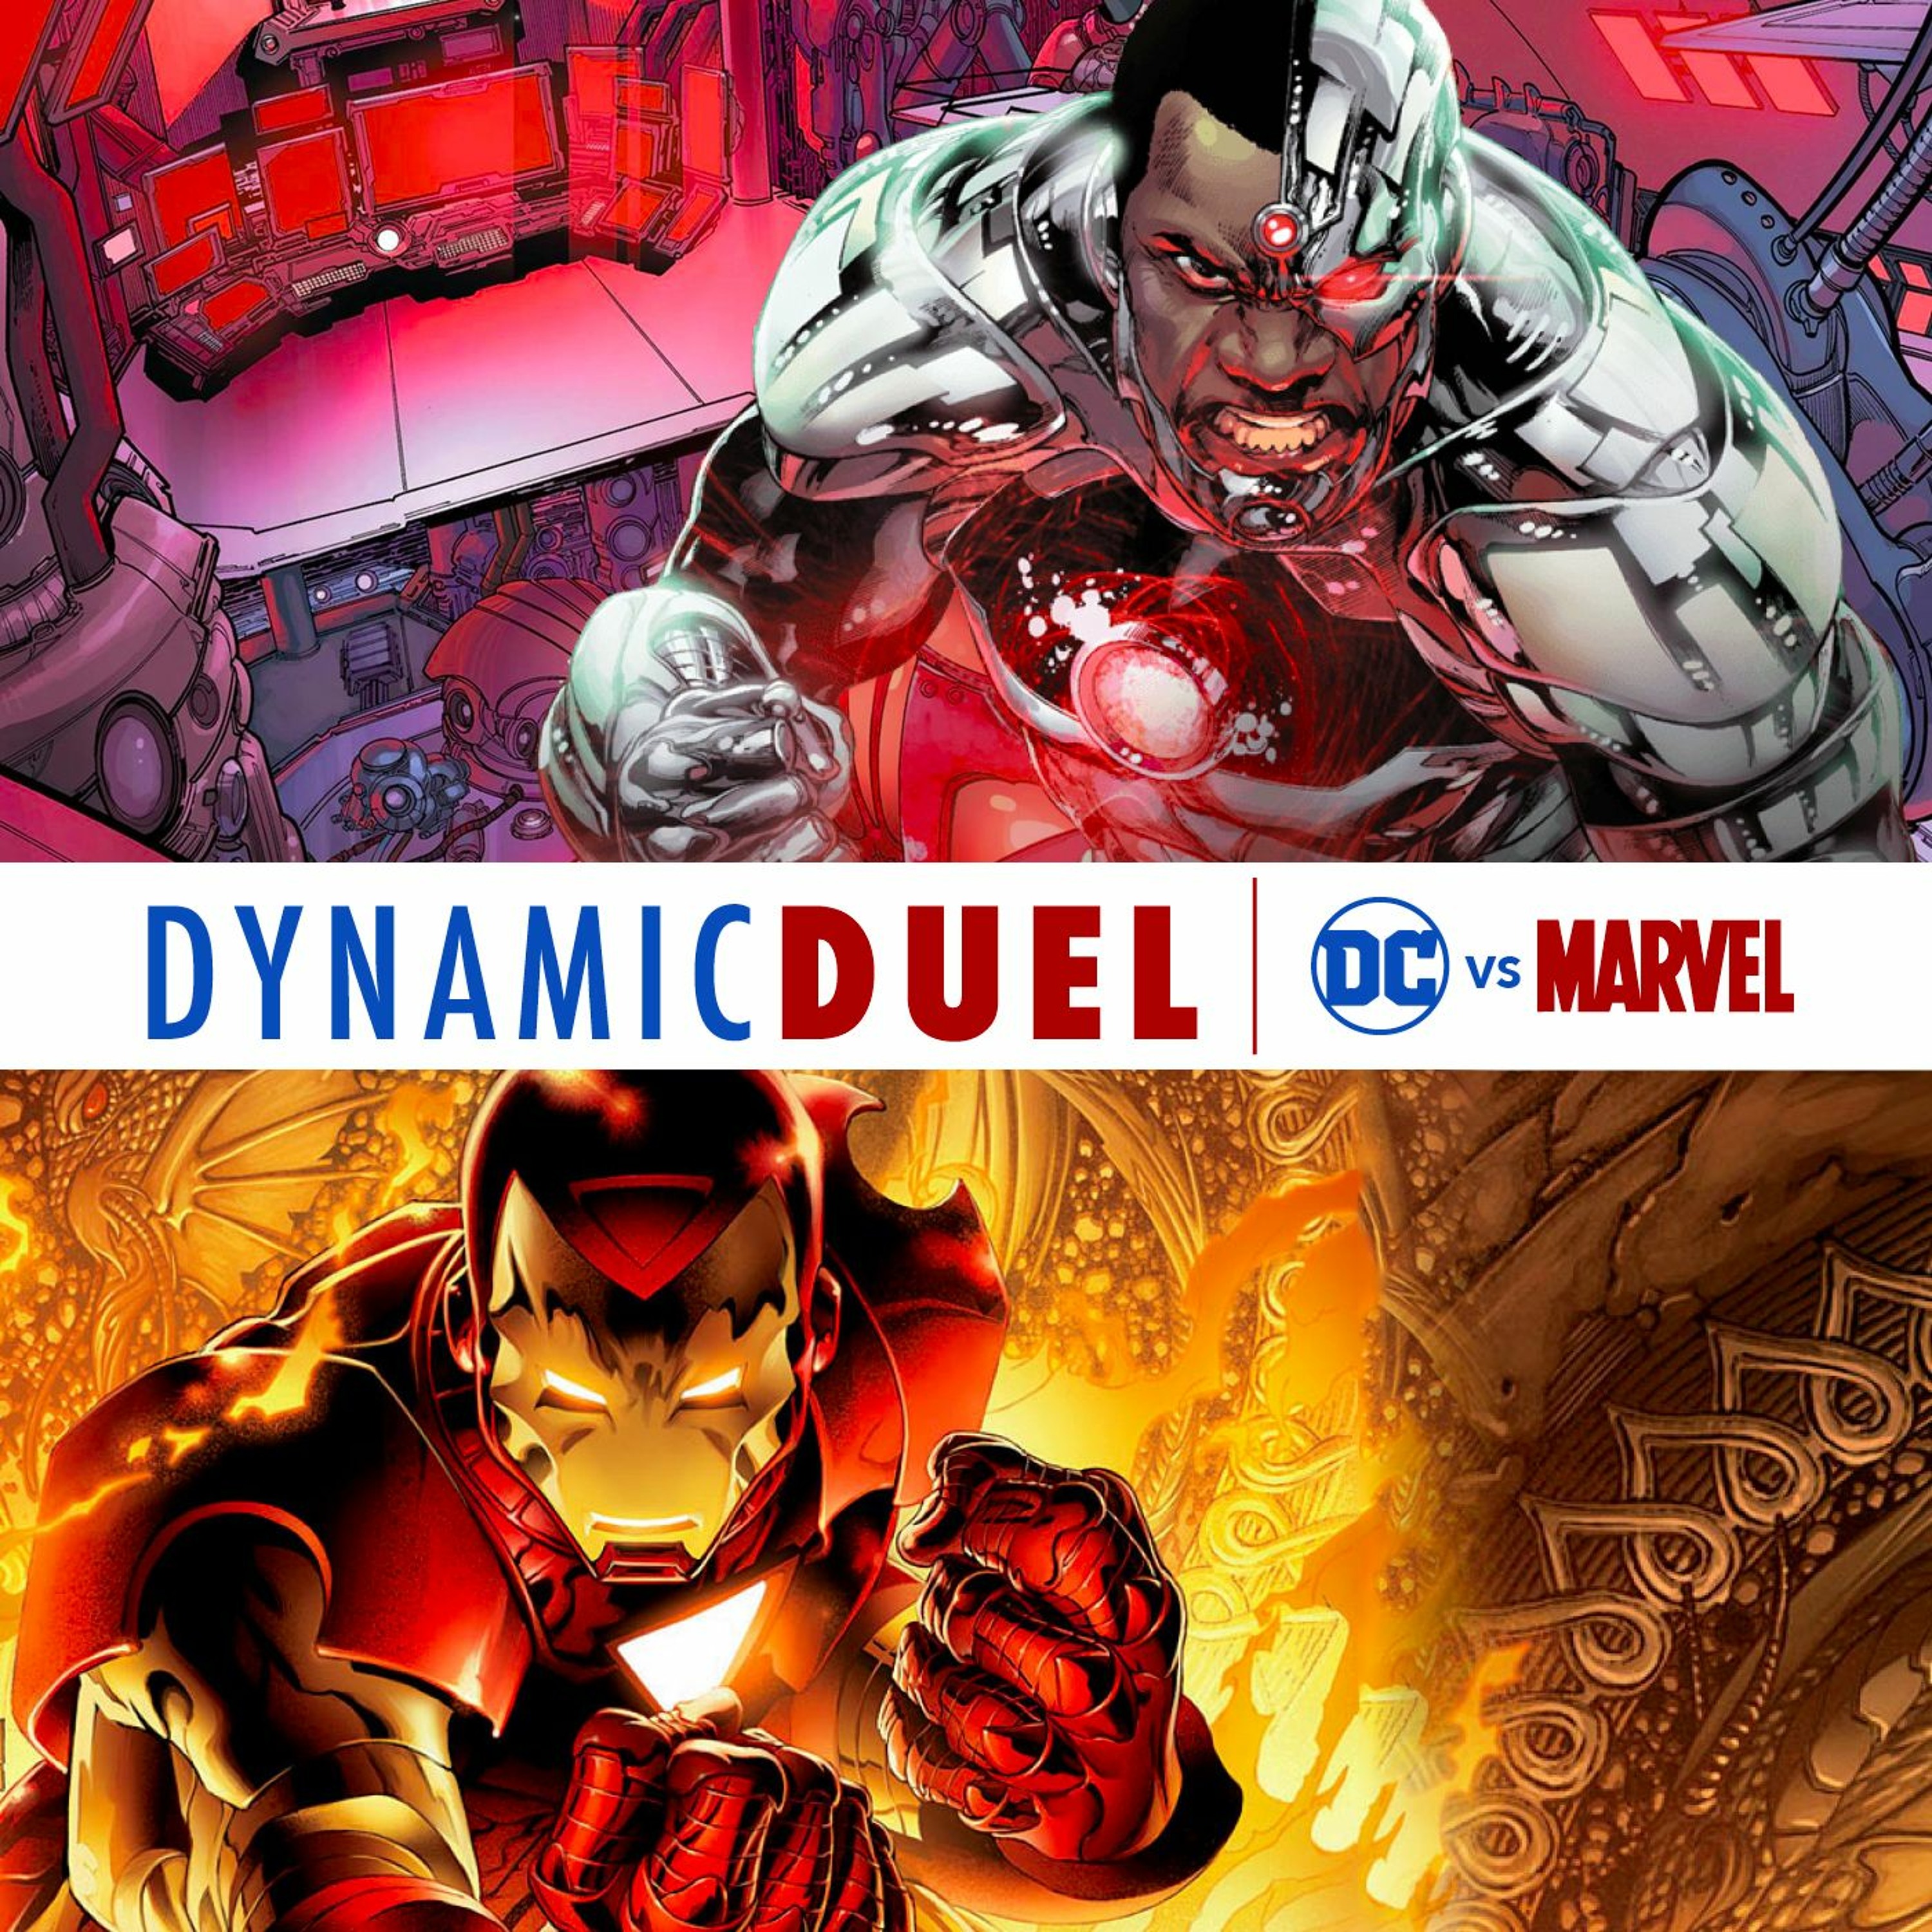 Cyborg vs Iron Man Image